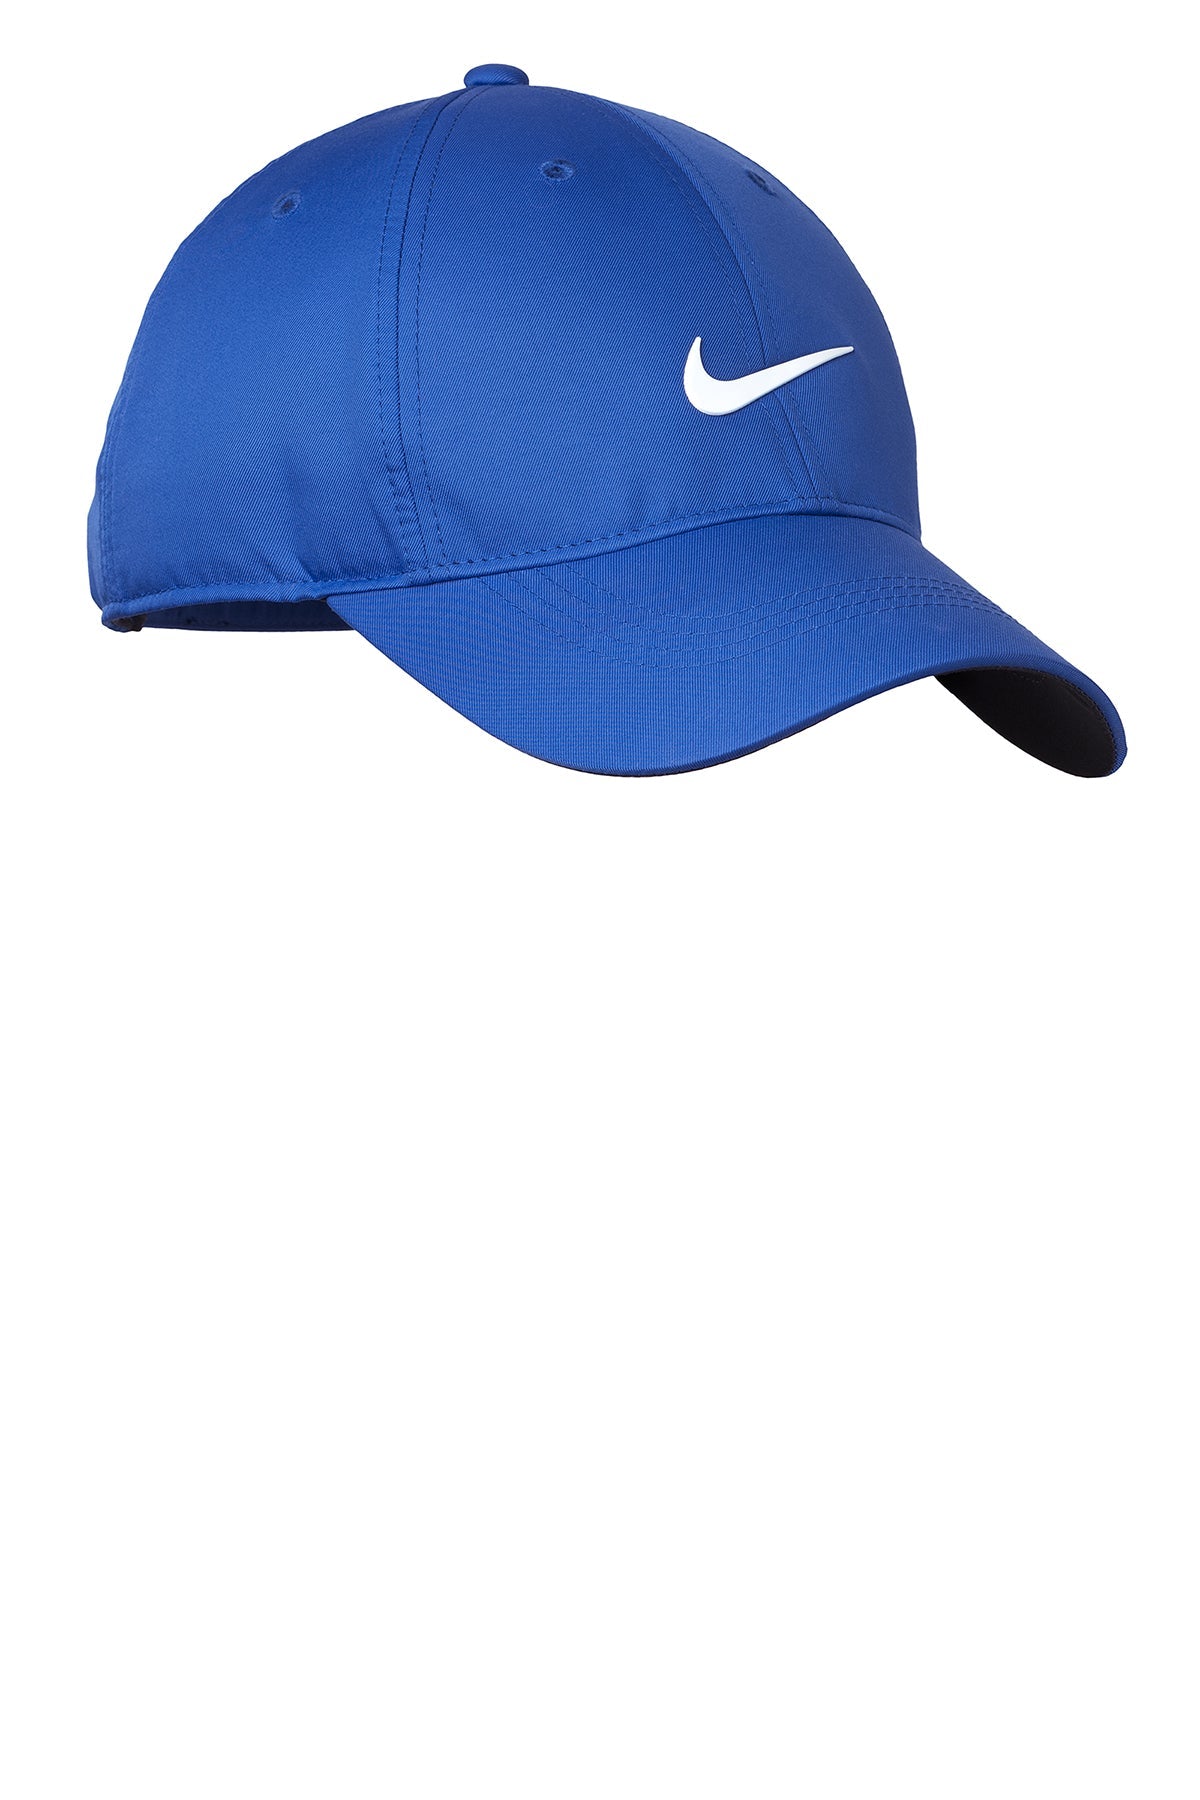 Nike Dri-FIT Swoosh Front Customized Caps, Game Royal